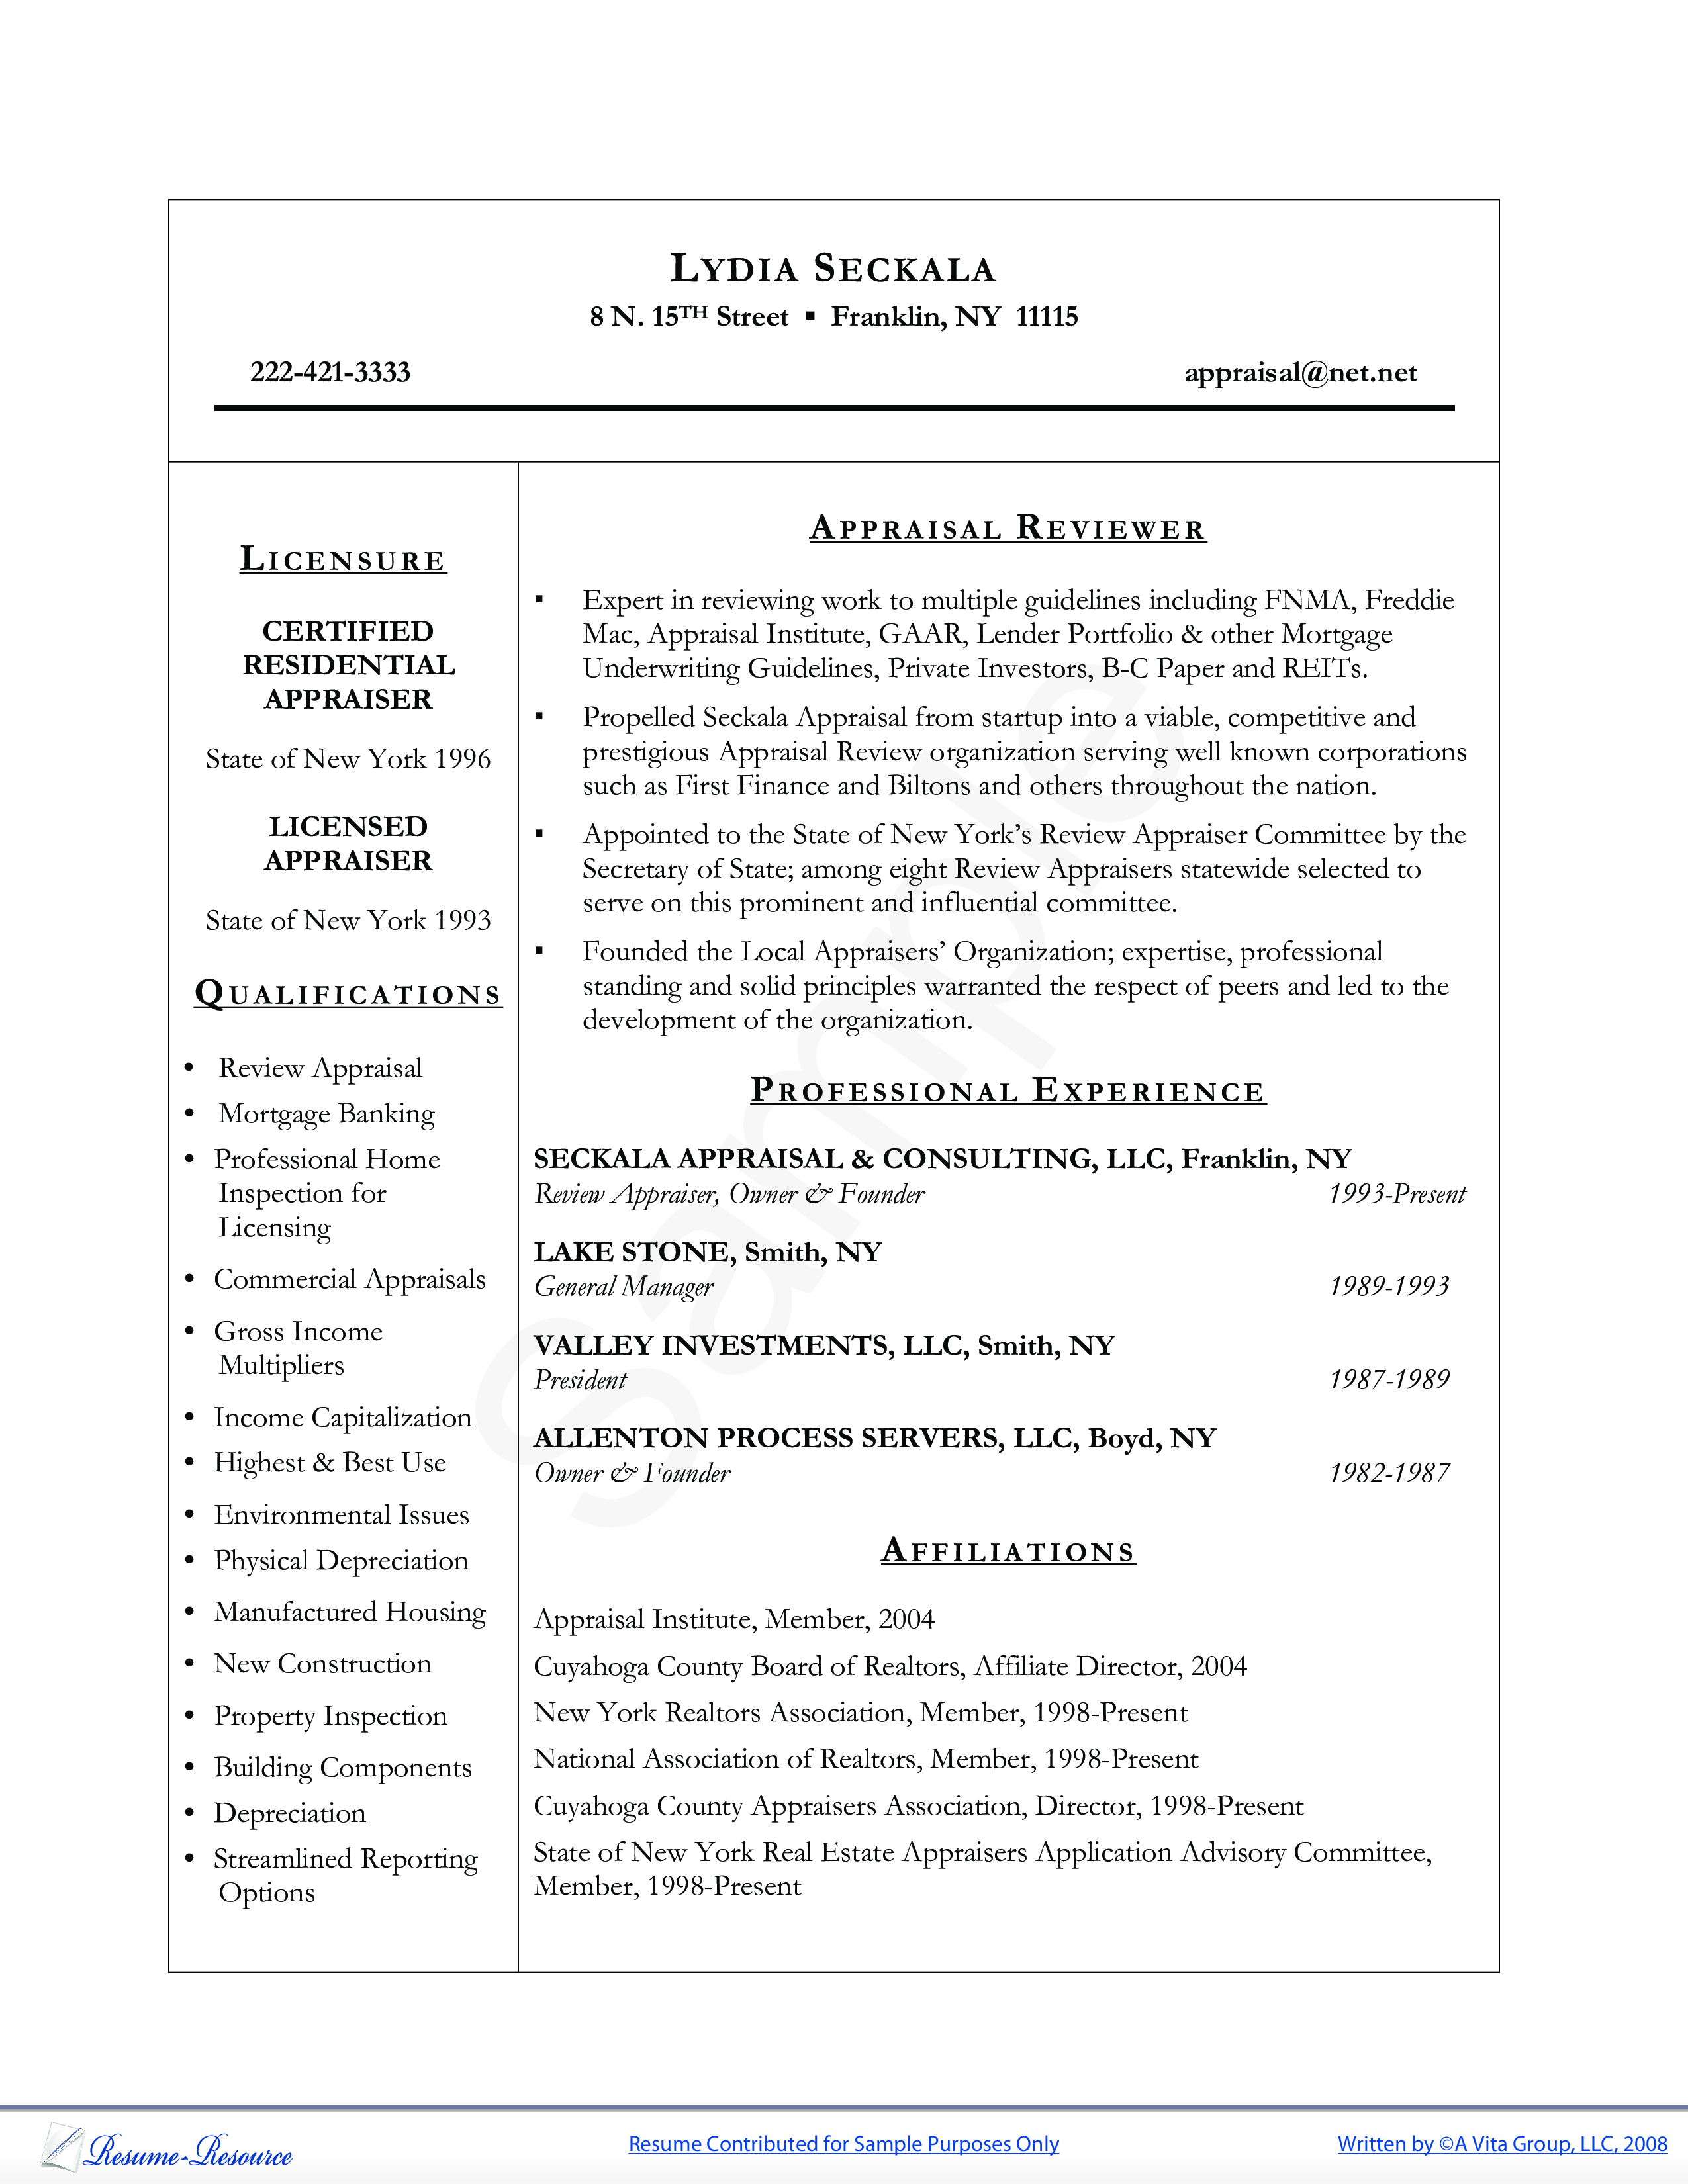 free appraiser resume sample templates at